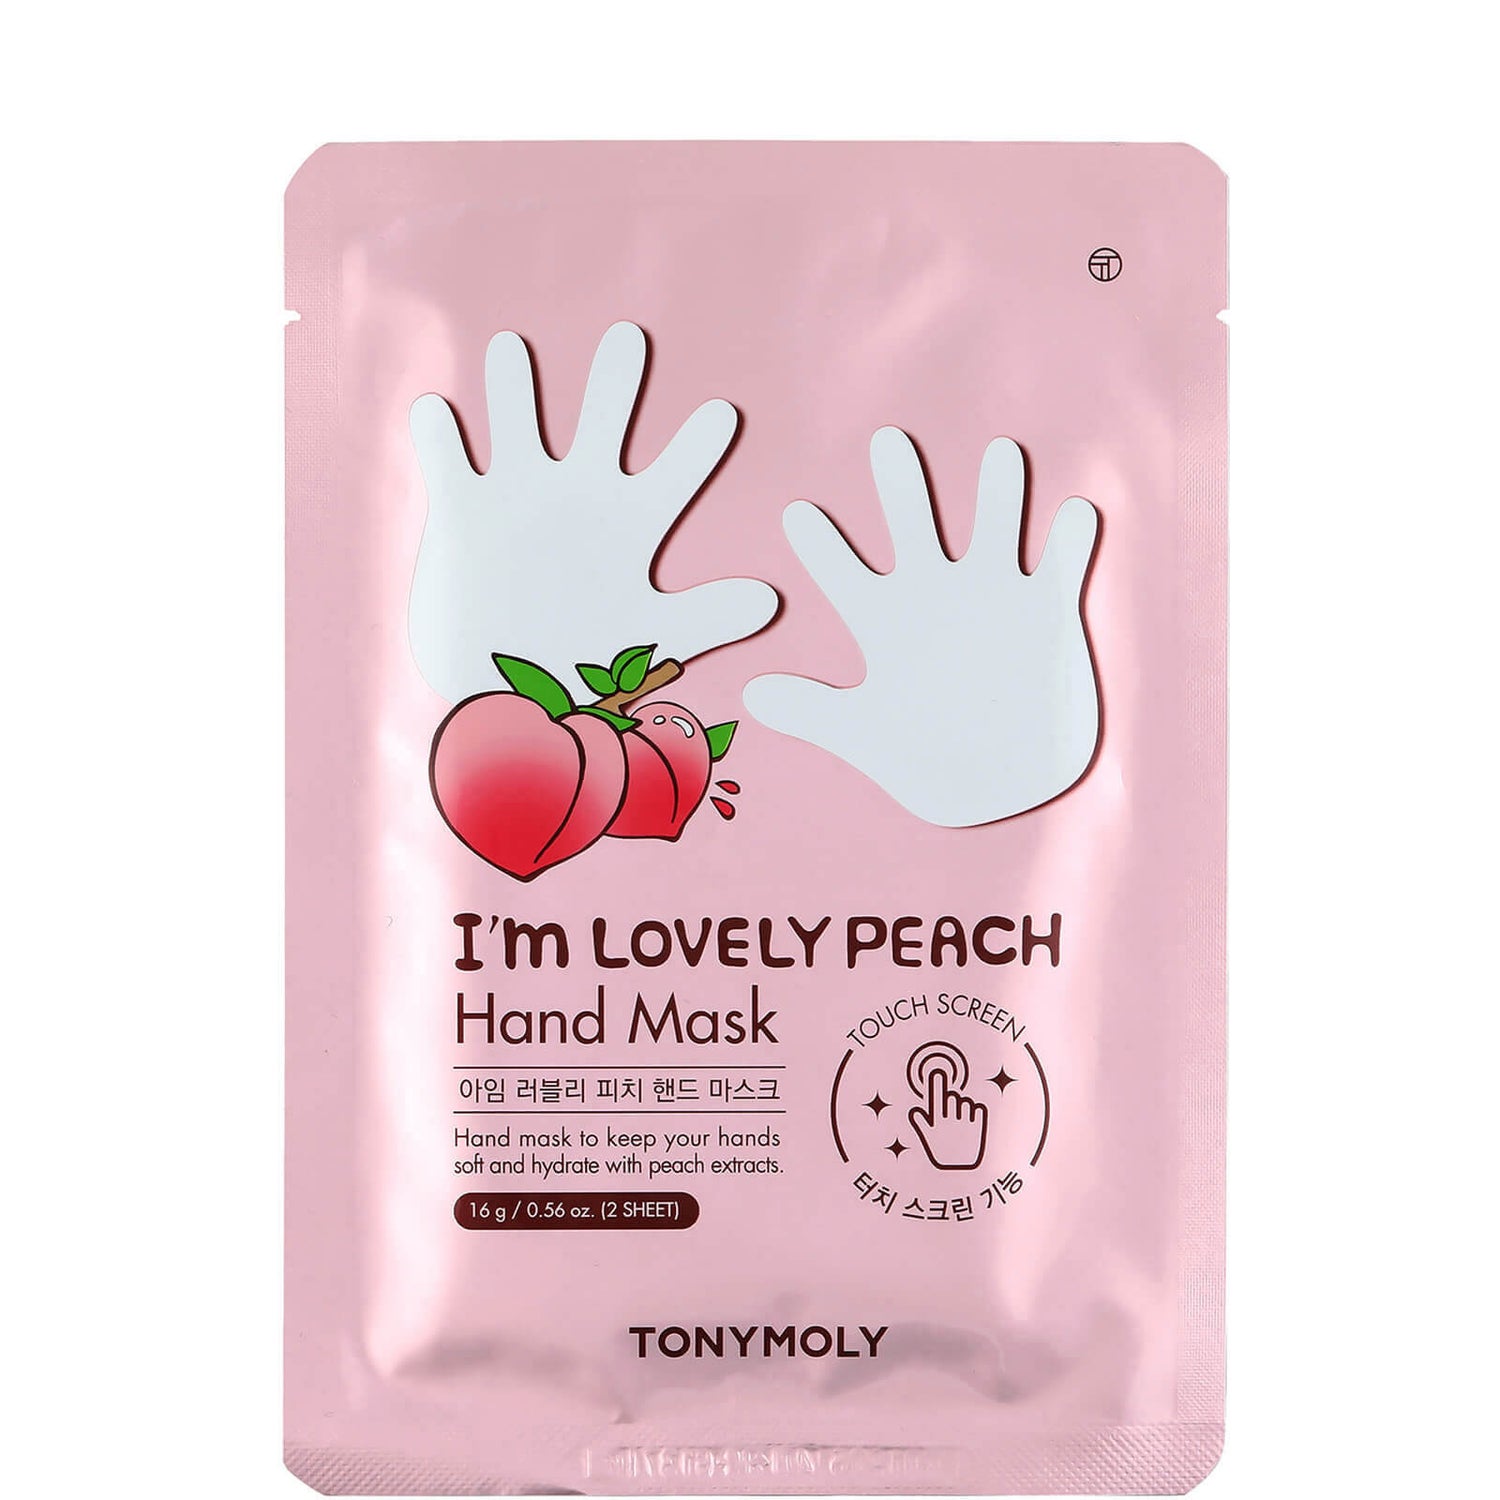 TONYMOLY Lovely Peach maschera mani alla pesca 16g